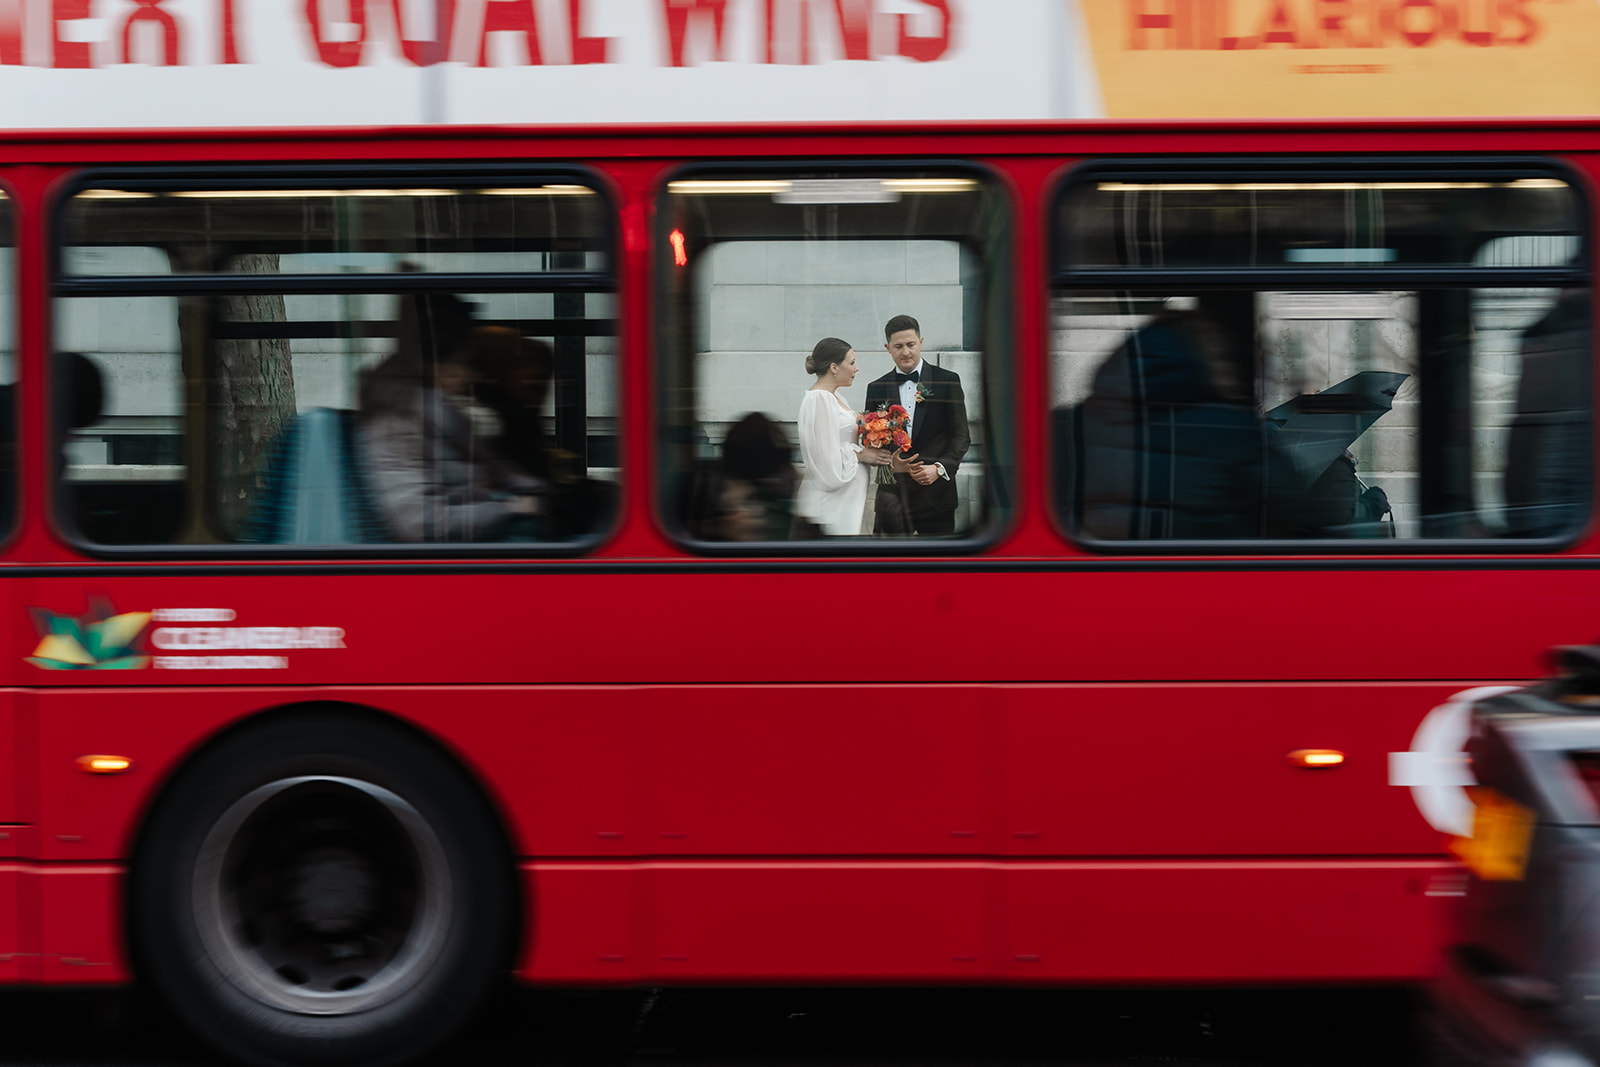 London Wedding photo capturing couple through moving bus